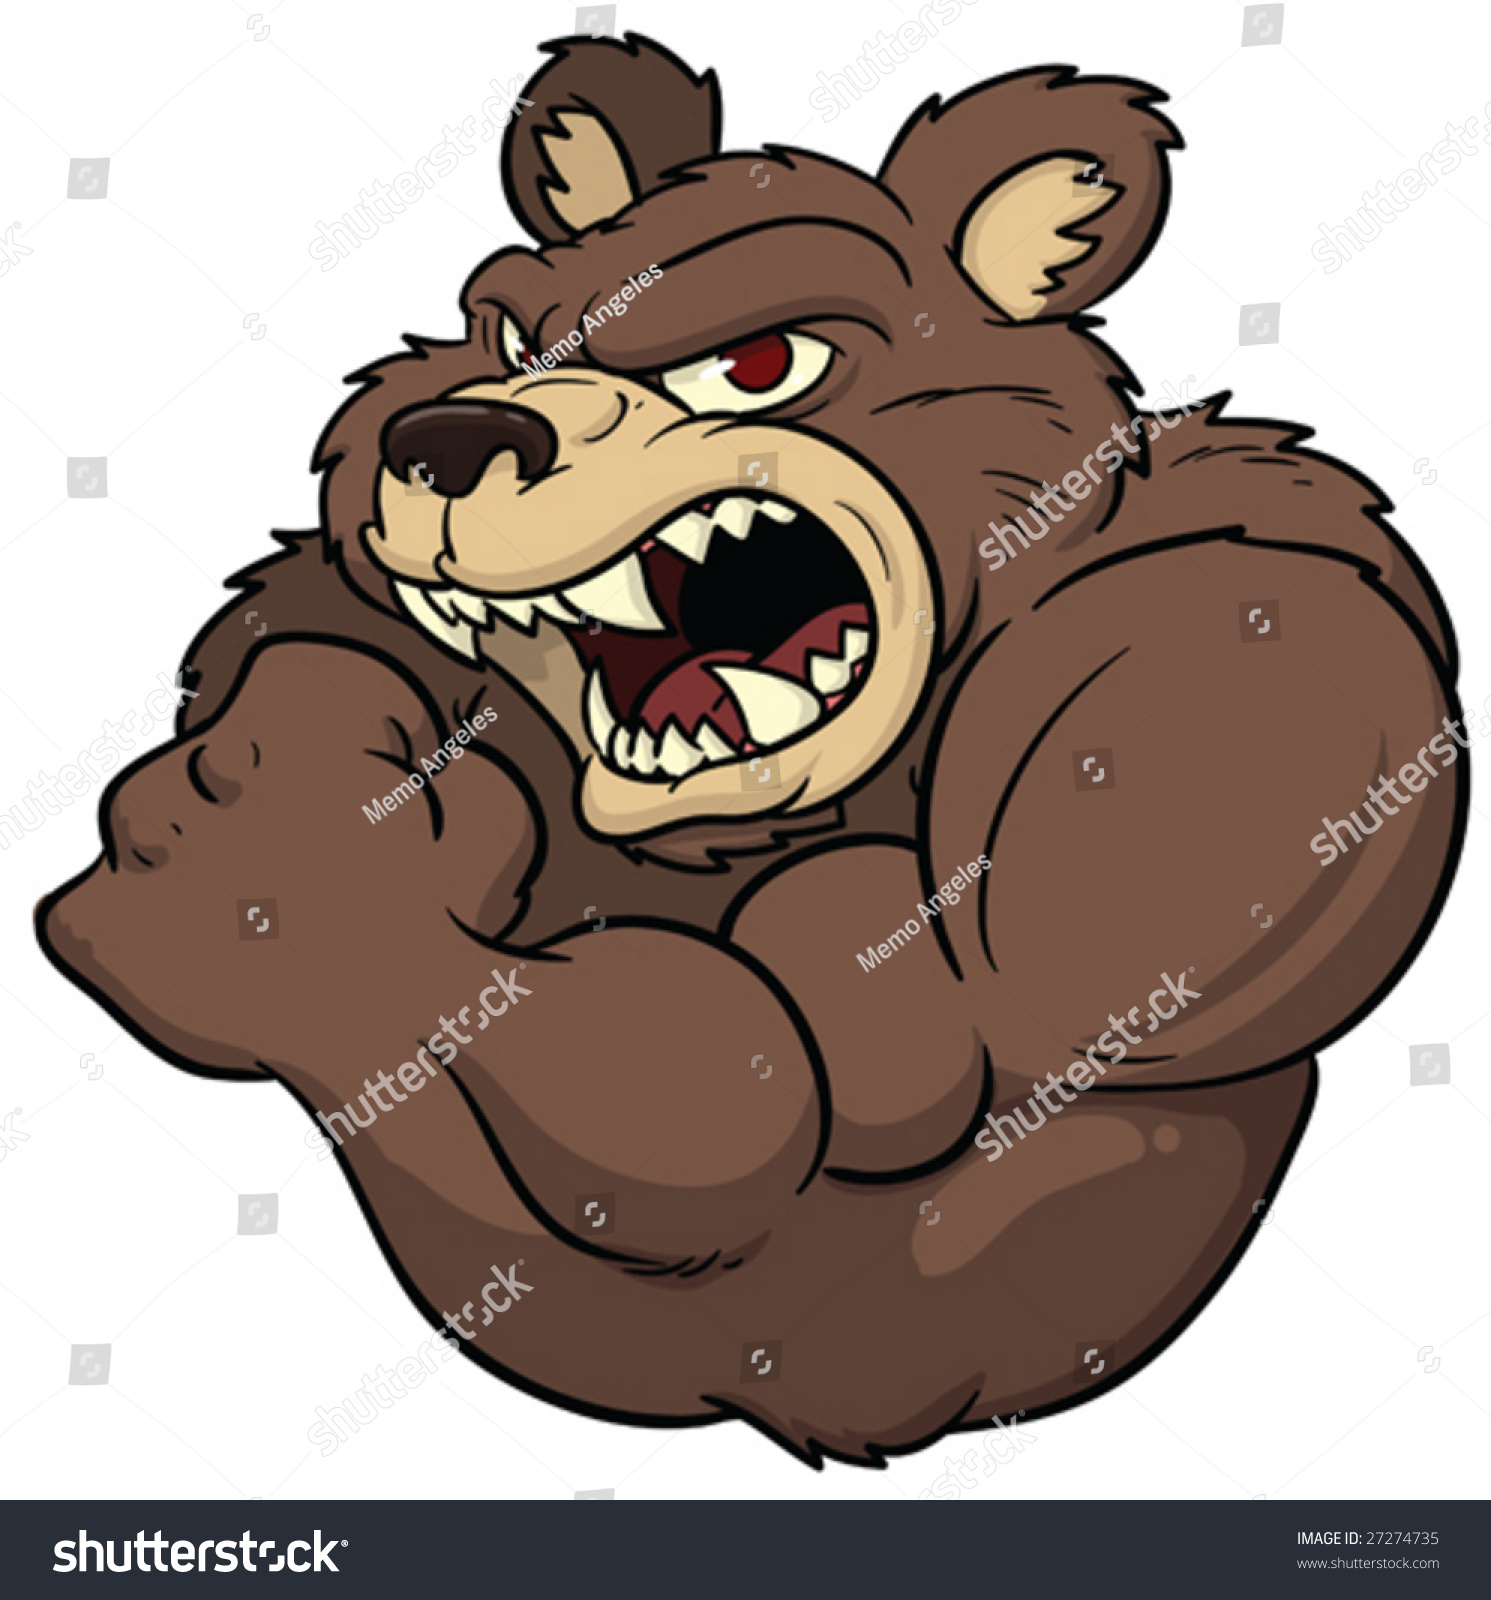 Angry Cartoon Bear Stock Vector 27274735 - Shutterstock